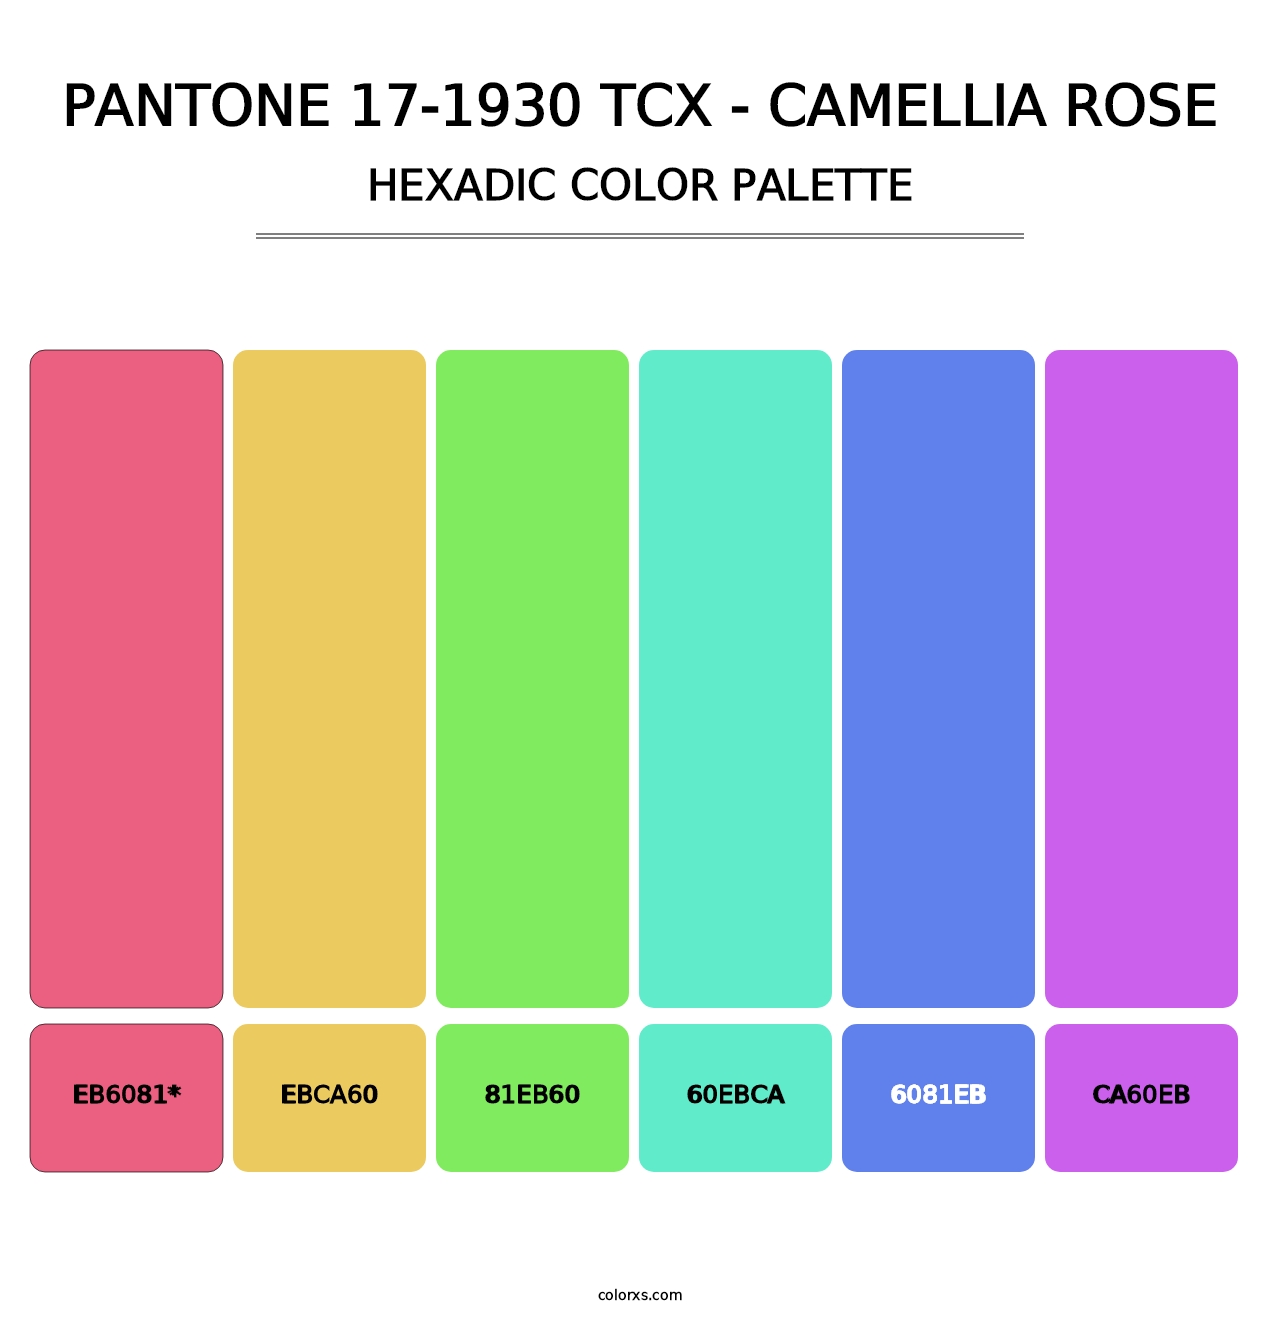 PANTONE 17-1930 TCX - Camellia Rose - Hexadic Color Palette